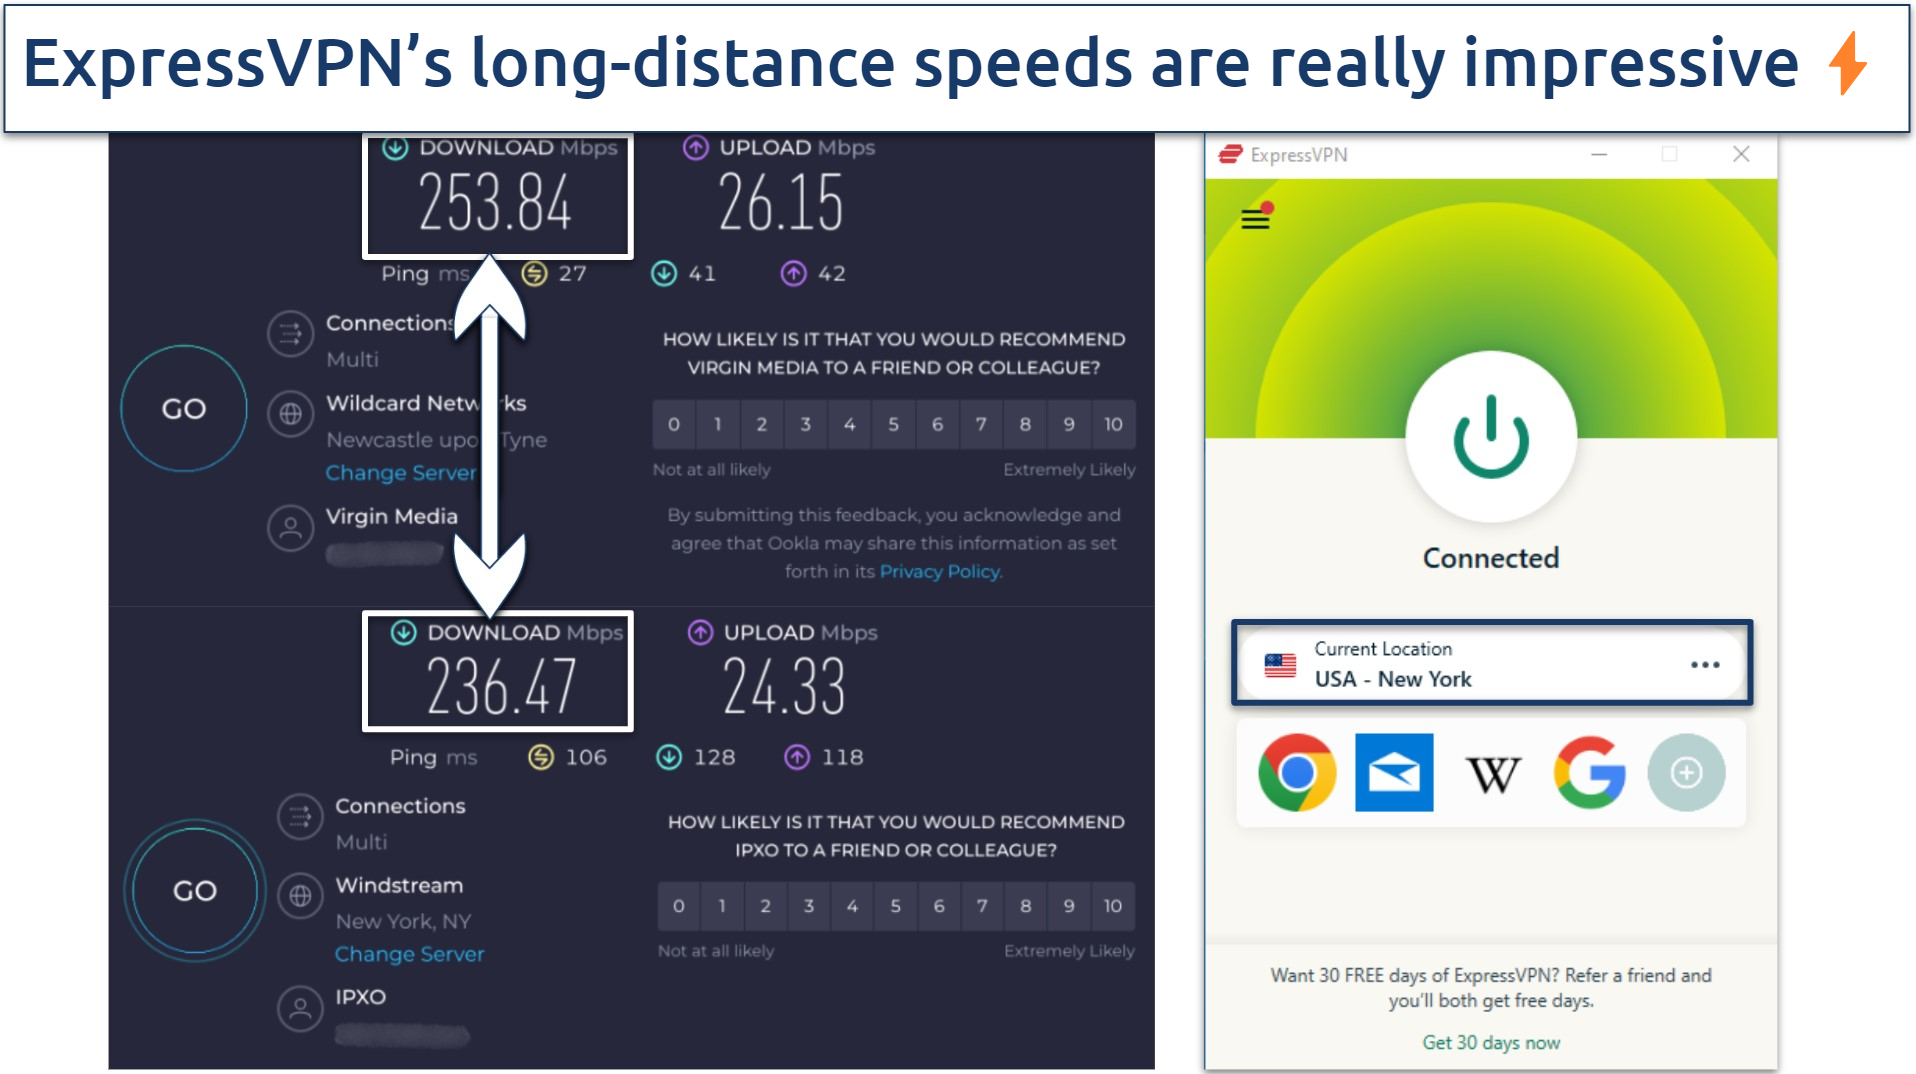 Screenshot of ExpressVPN speed test results on long-distance server in New York, US